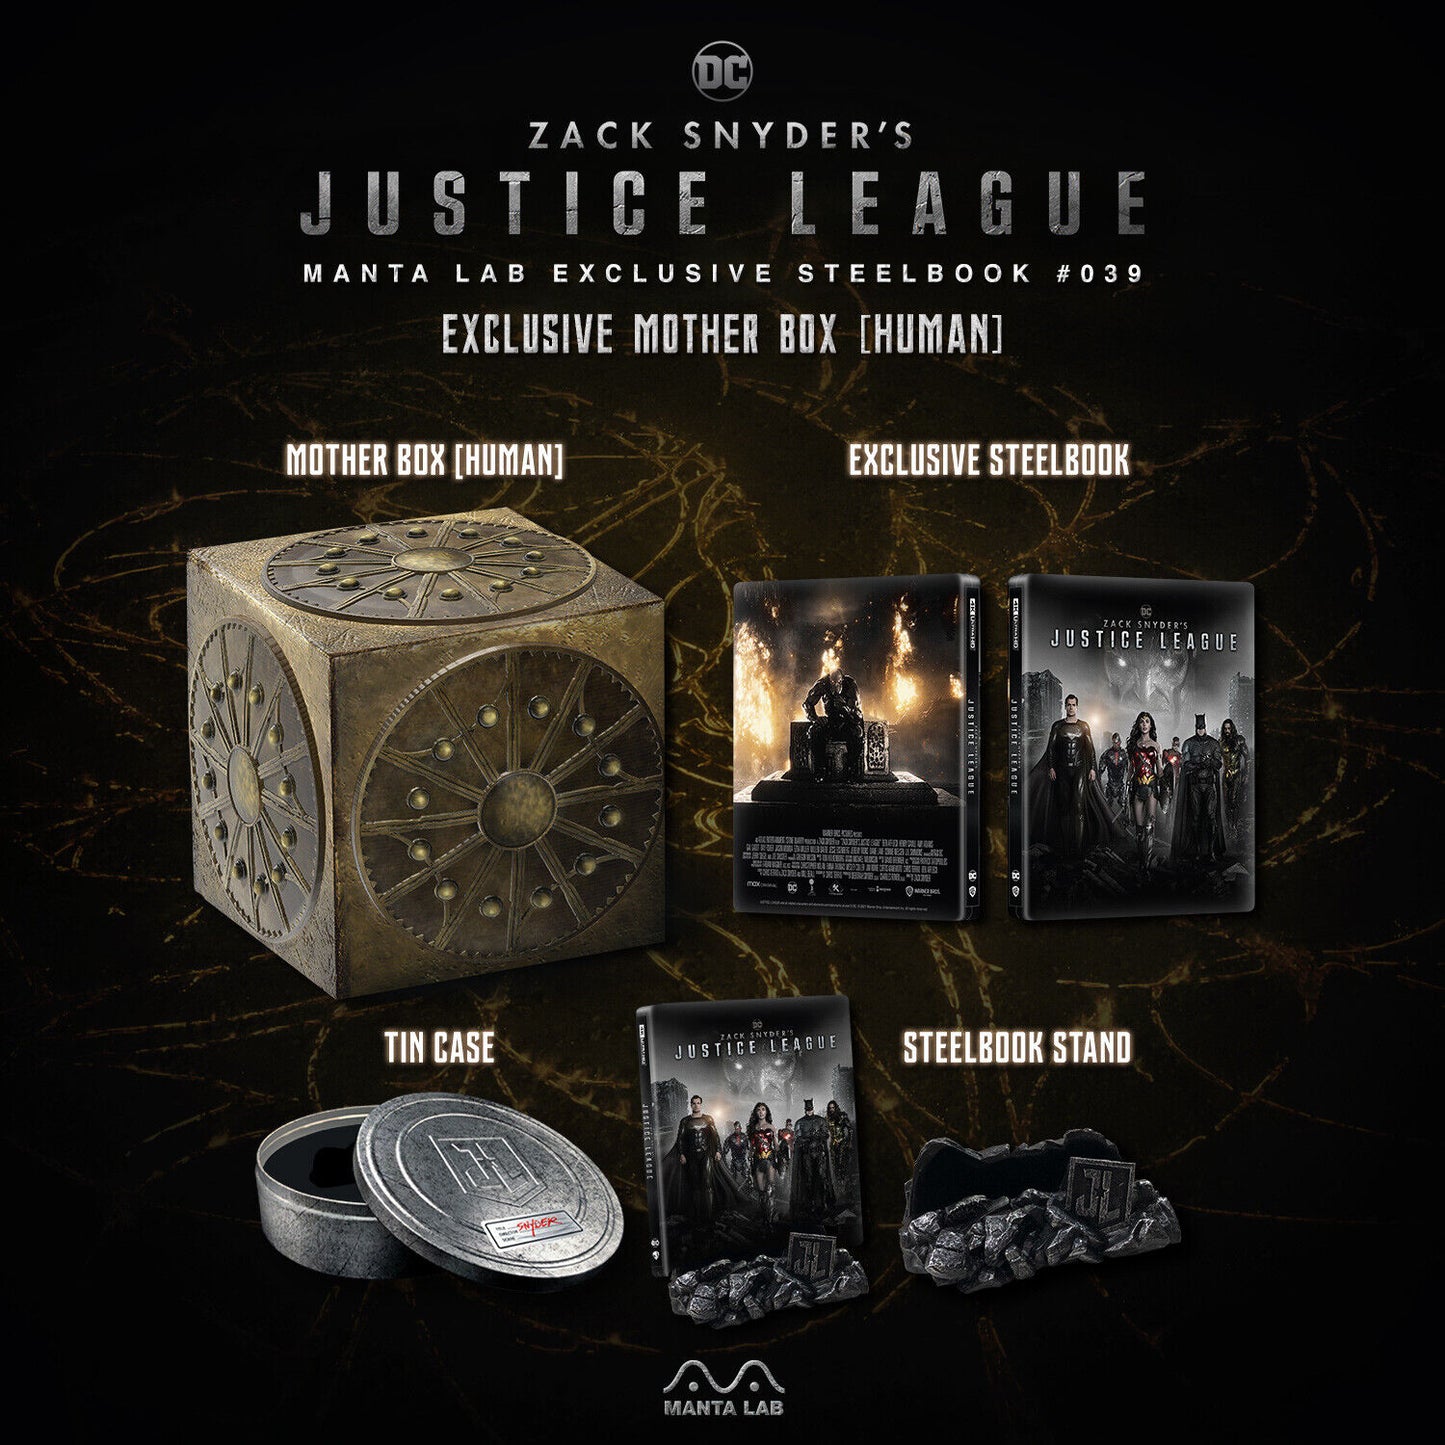 Zack Snyder's Justice League 4K Blu-ray Steelbook Manta Lab Exclusive ME#39 Motherbox Human